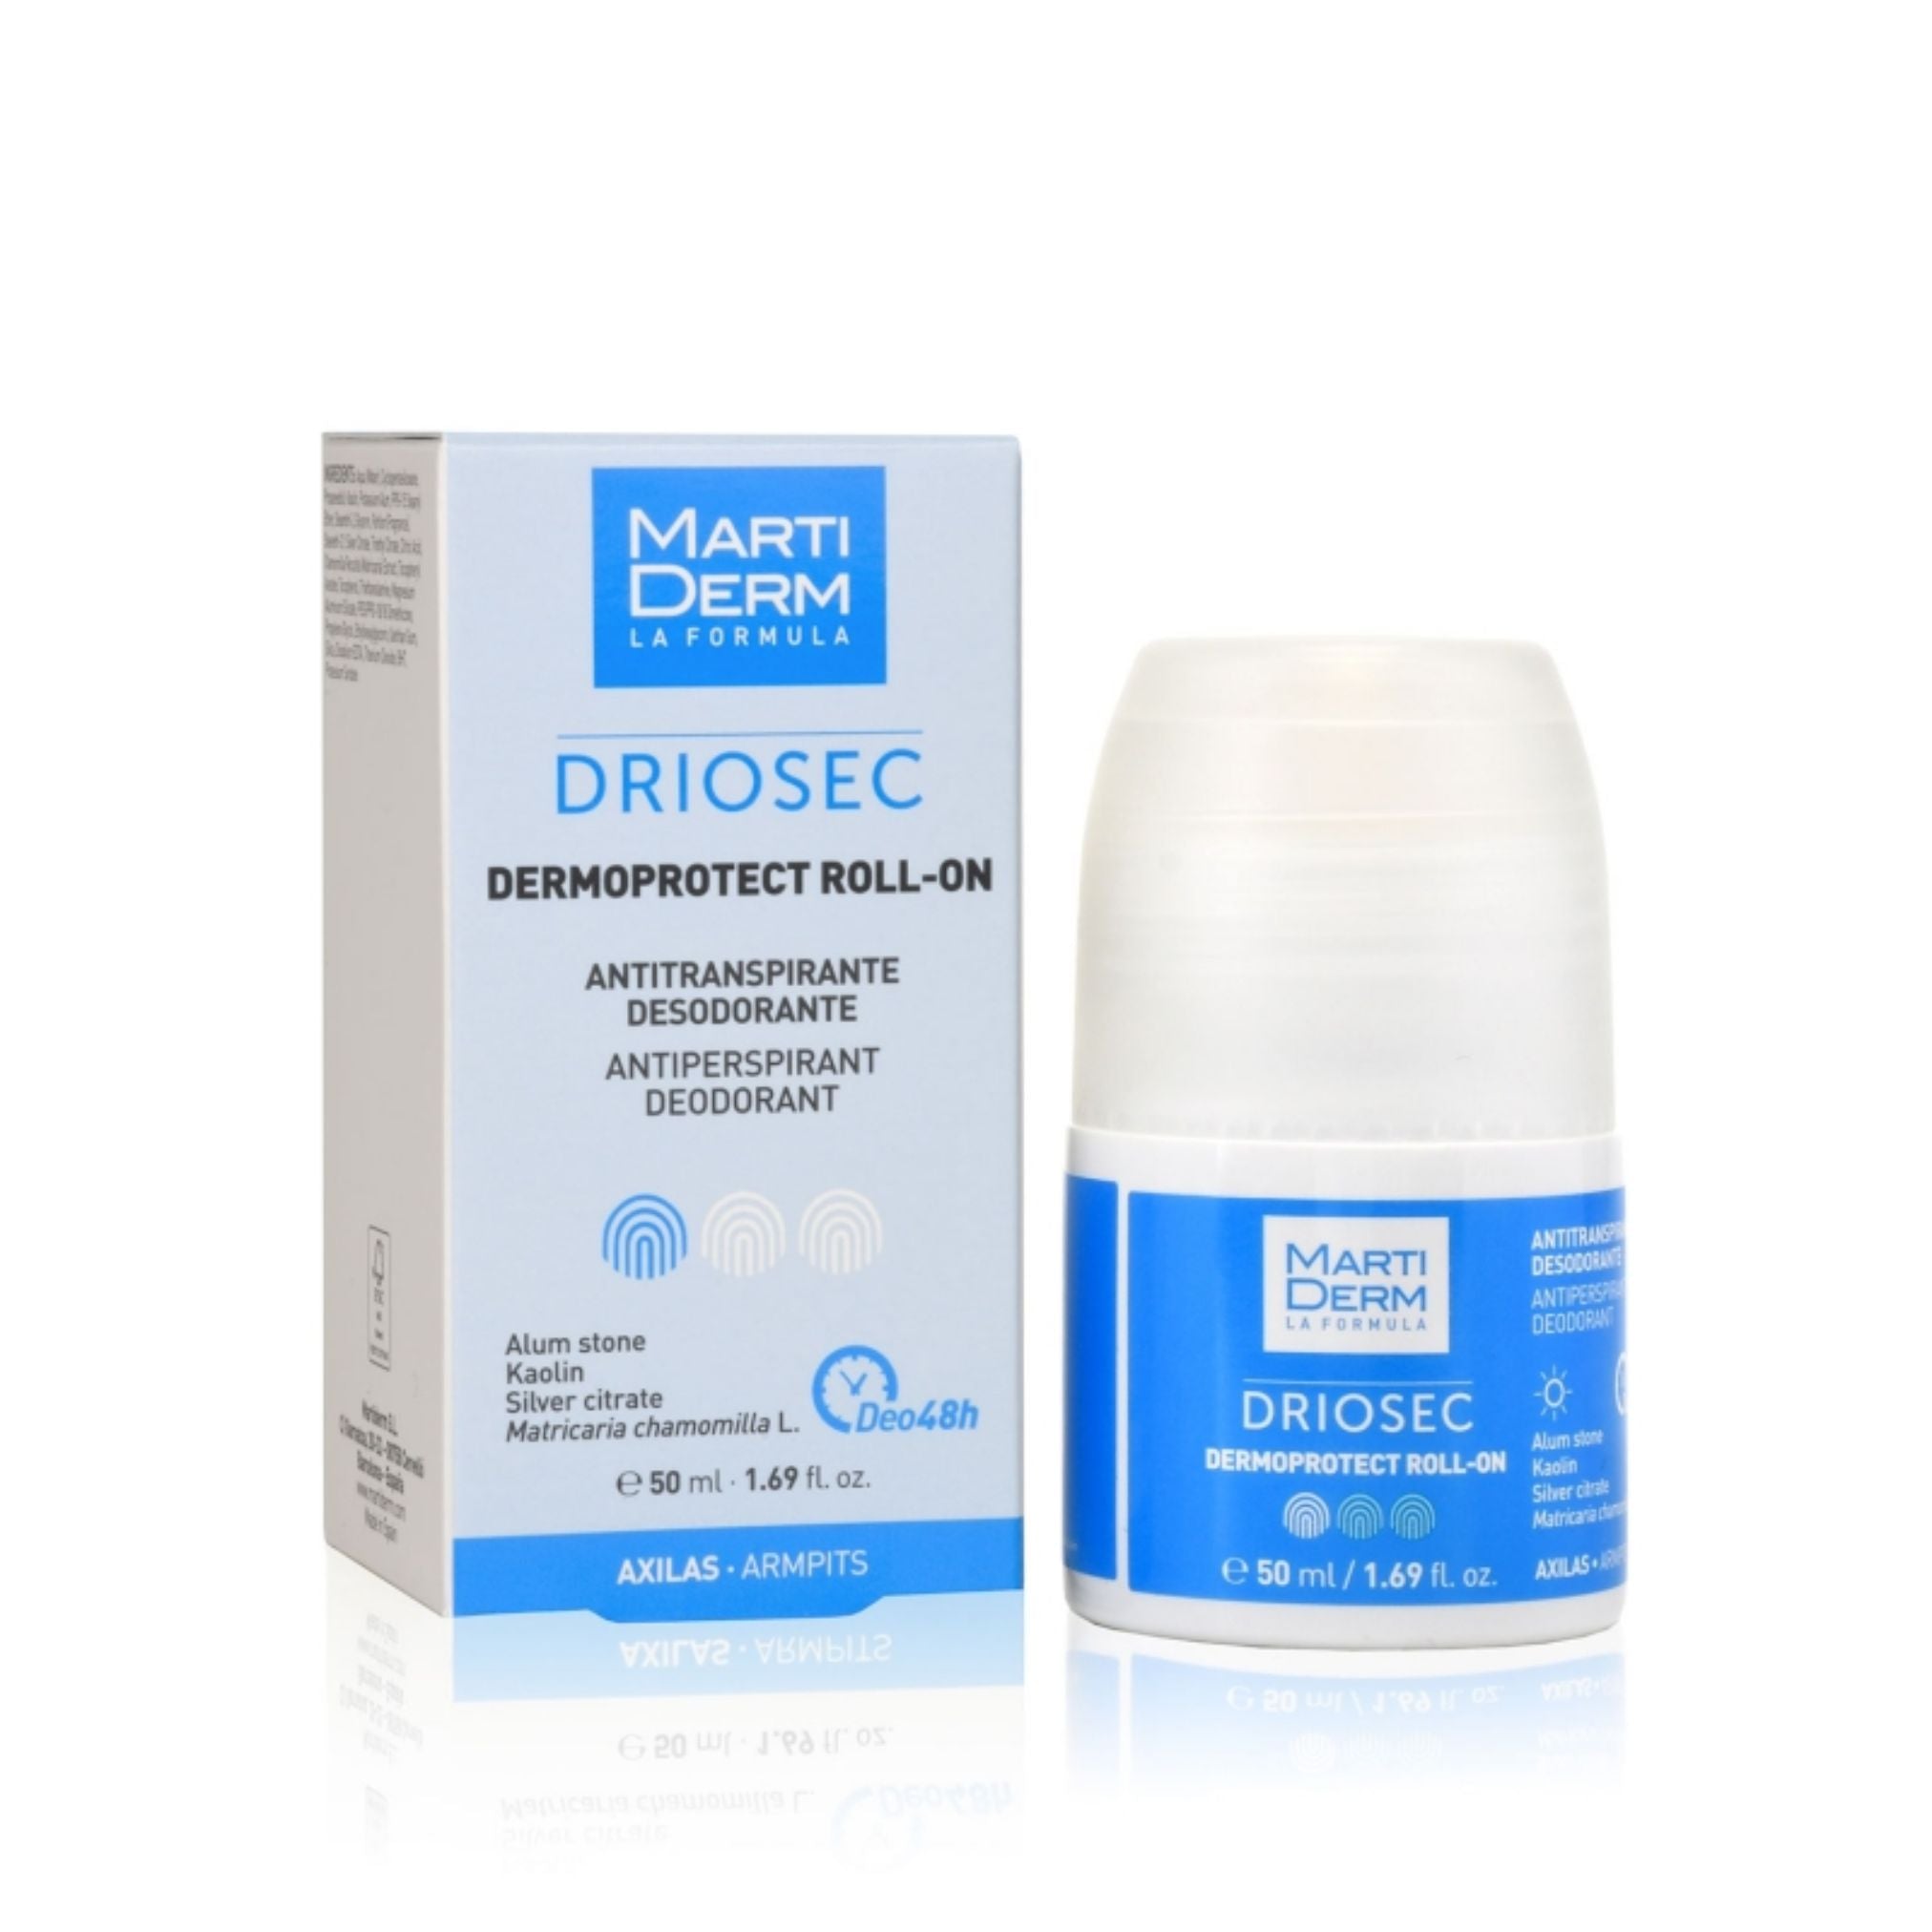 Martiderm Driosec Roll-On Dermoprotect 50ml